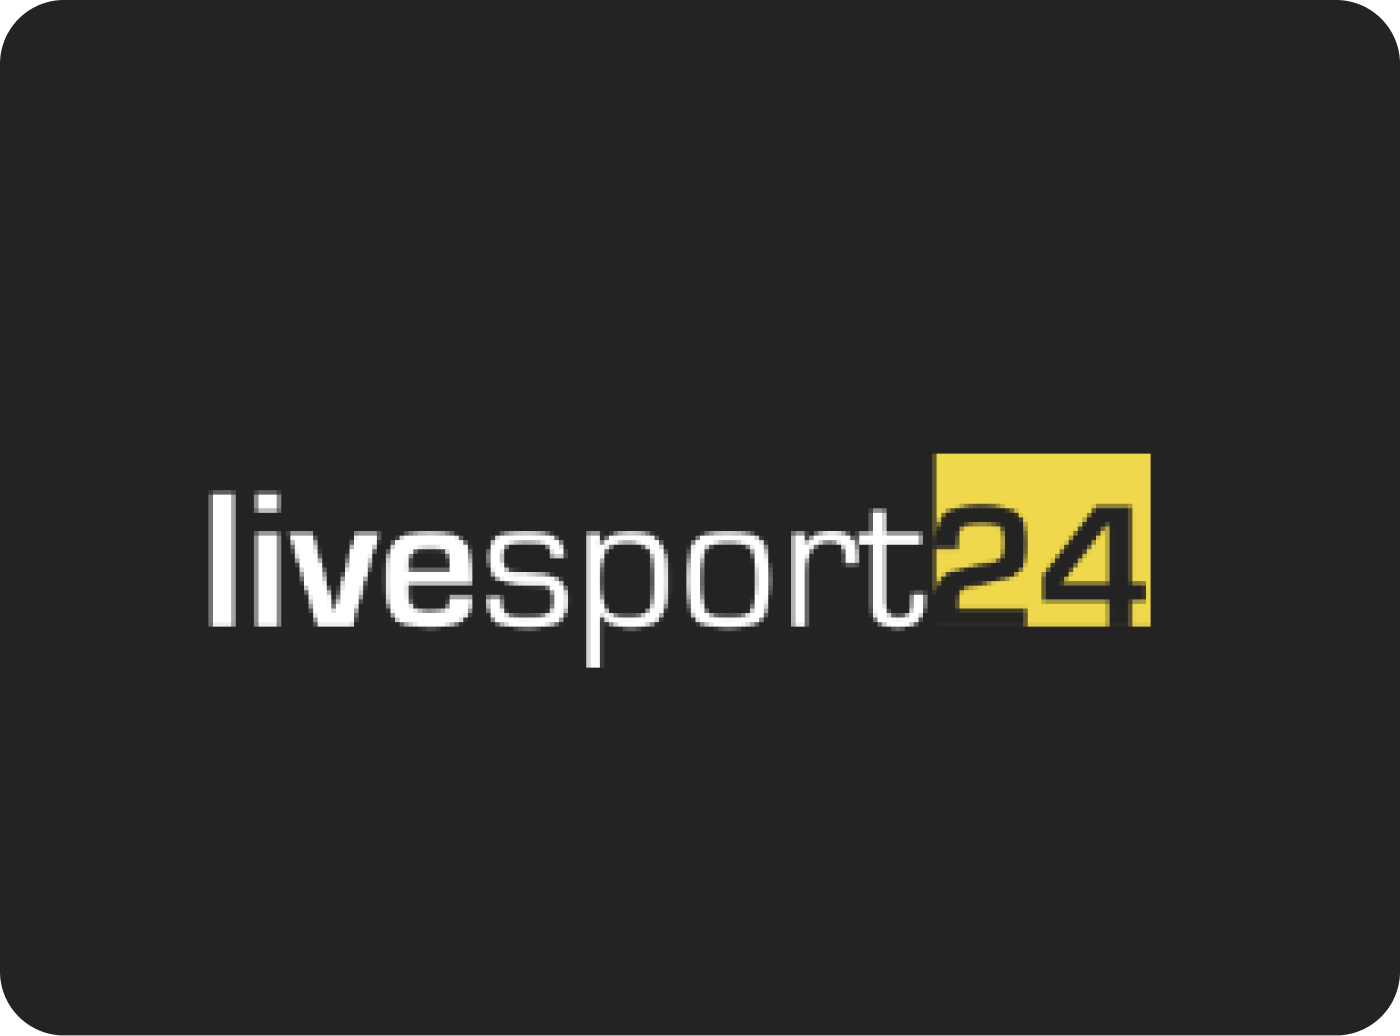 LiveSport24